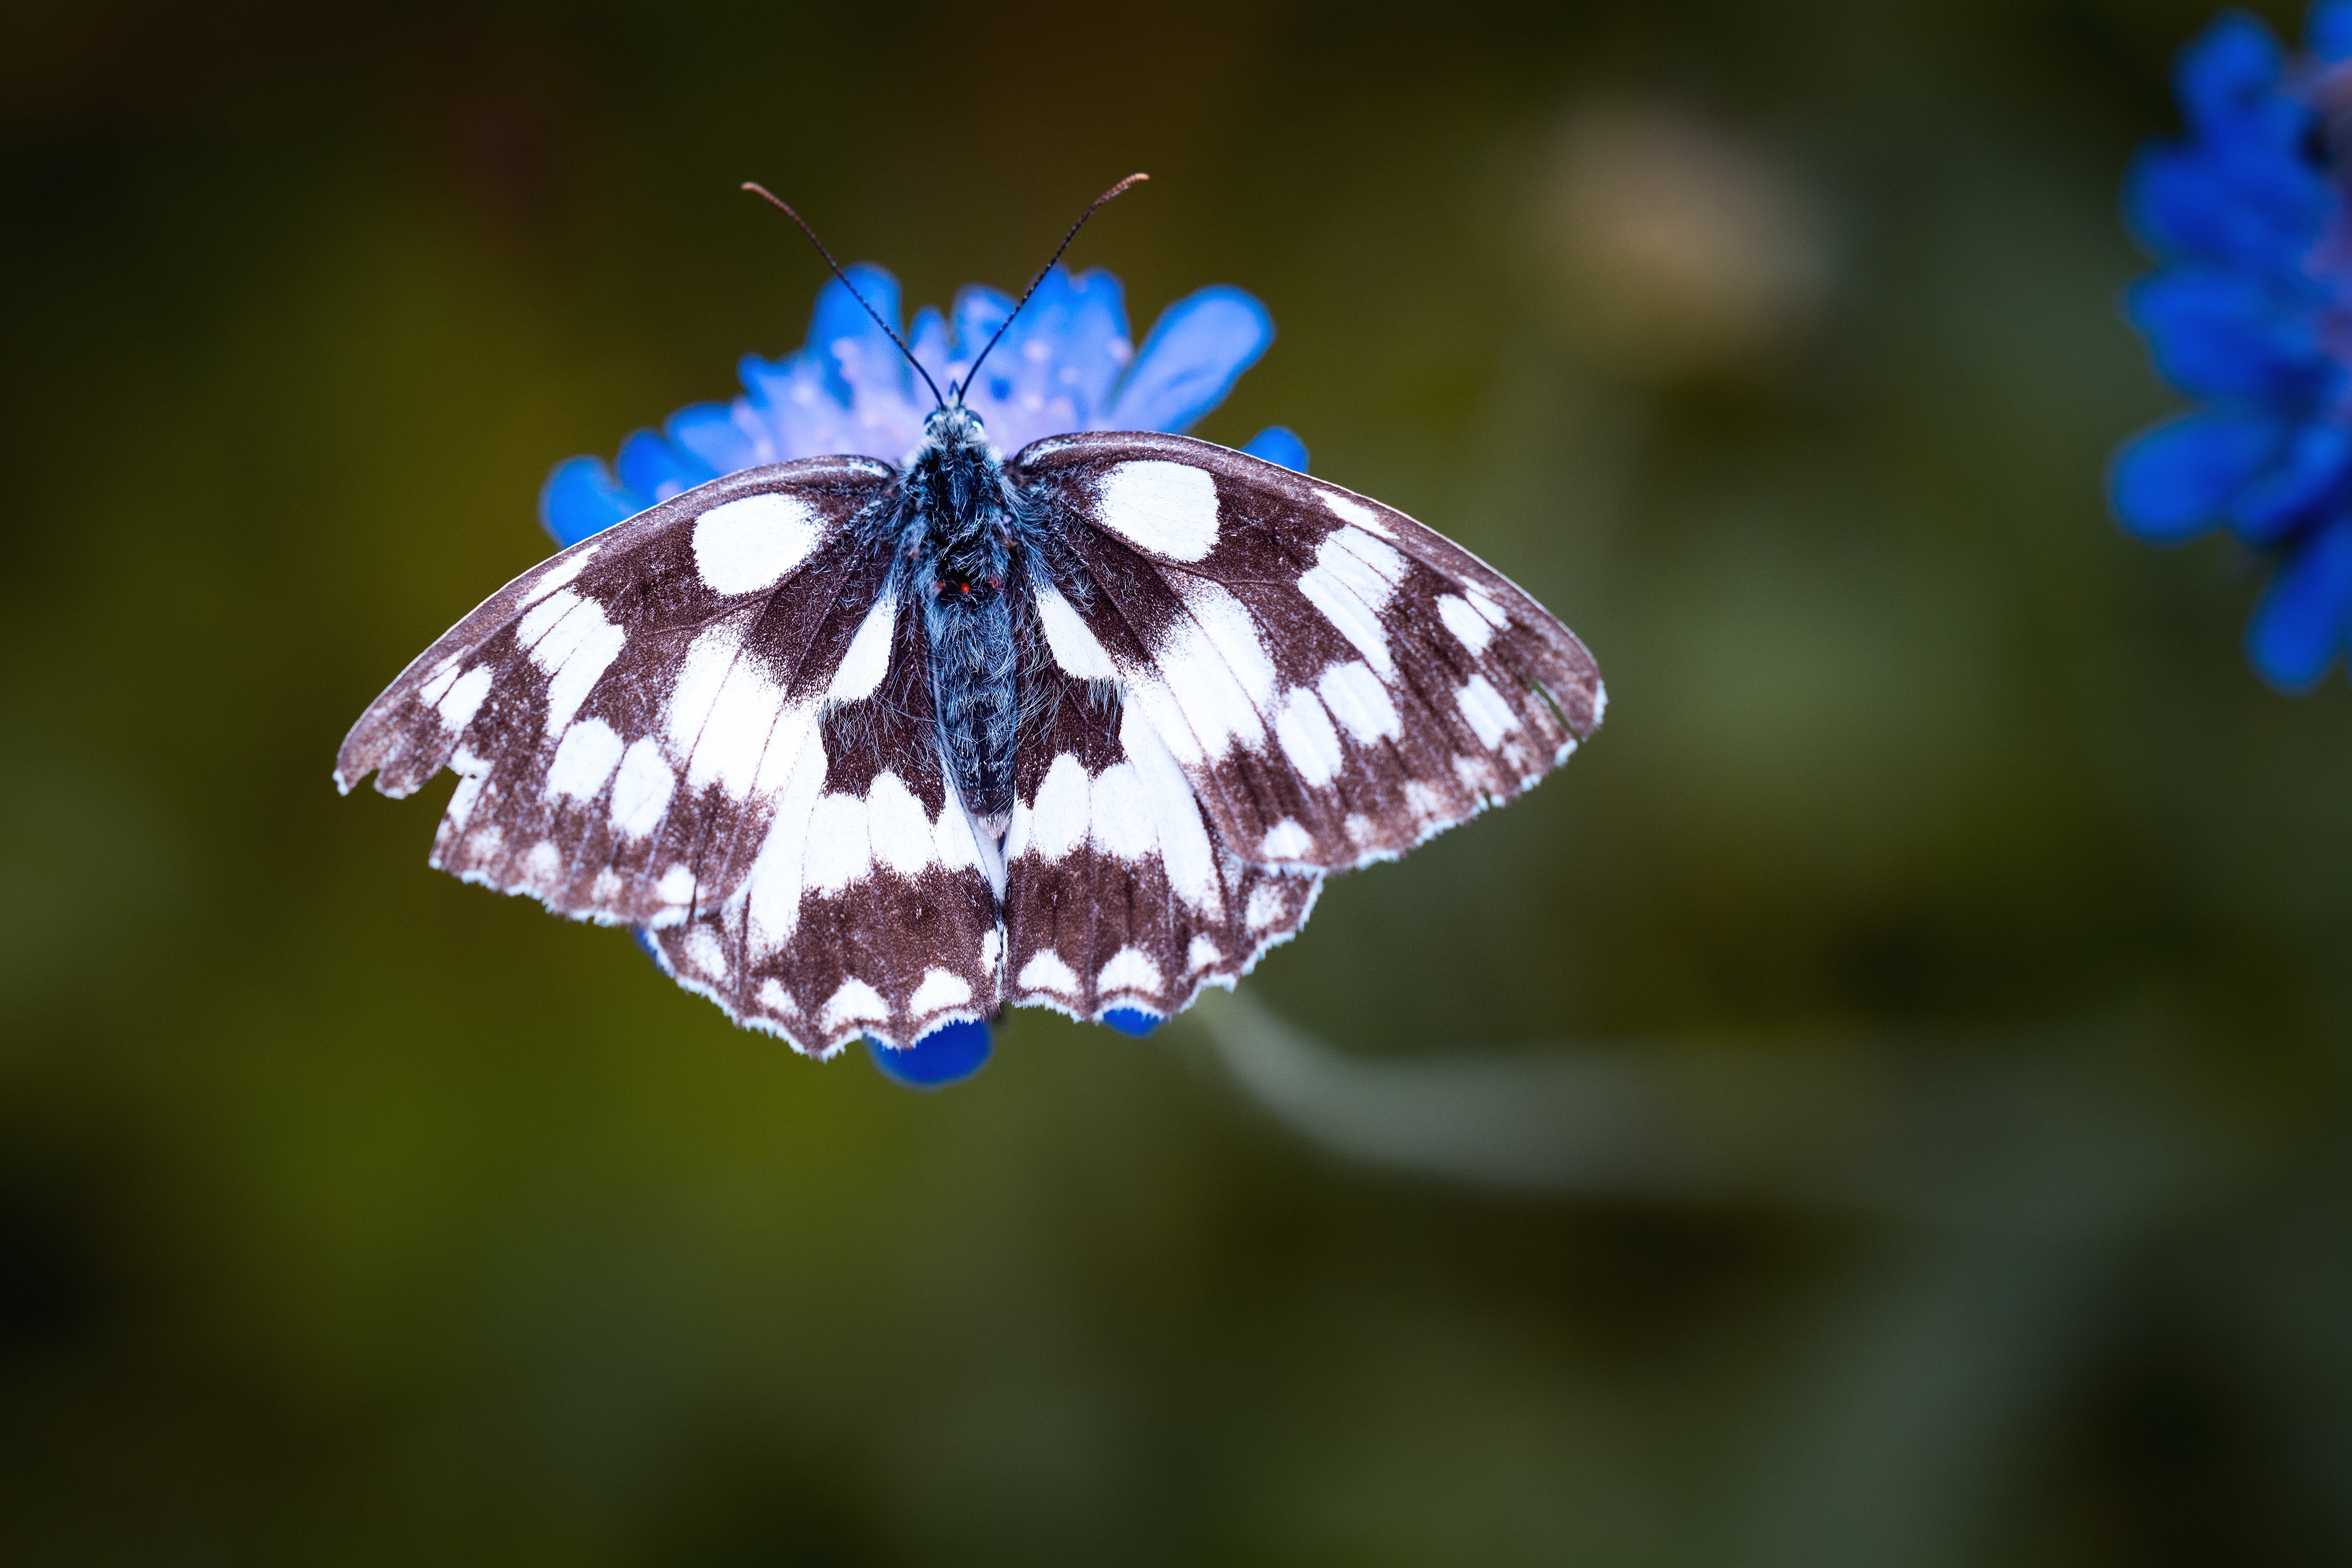 Magpie moth perched on blue flower in tilt shift lens photo